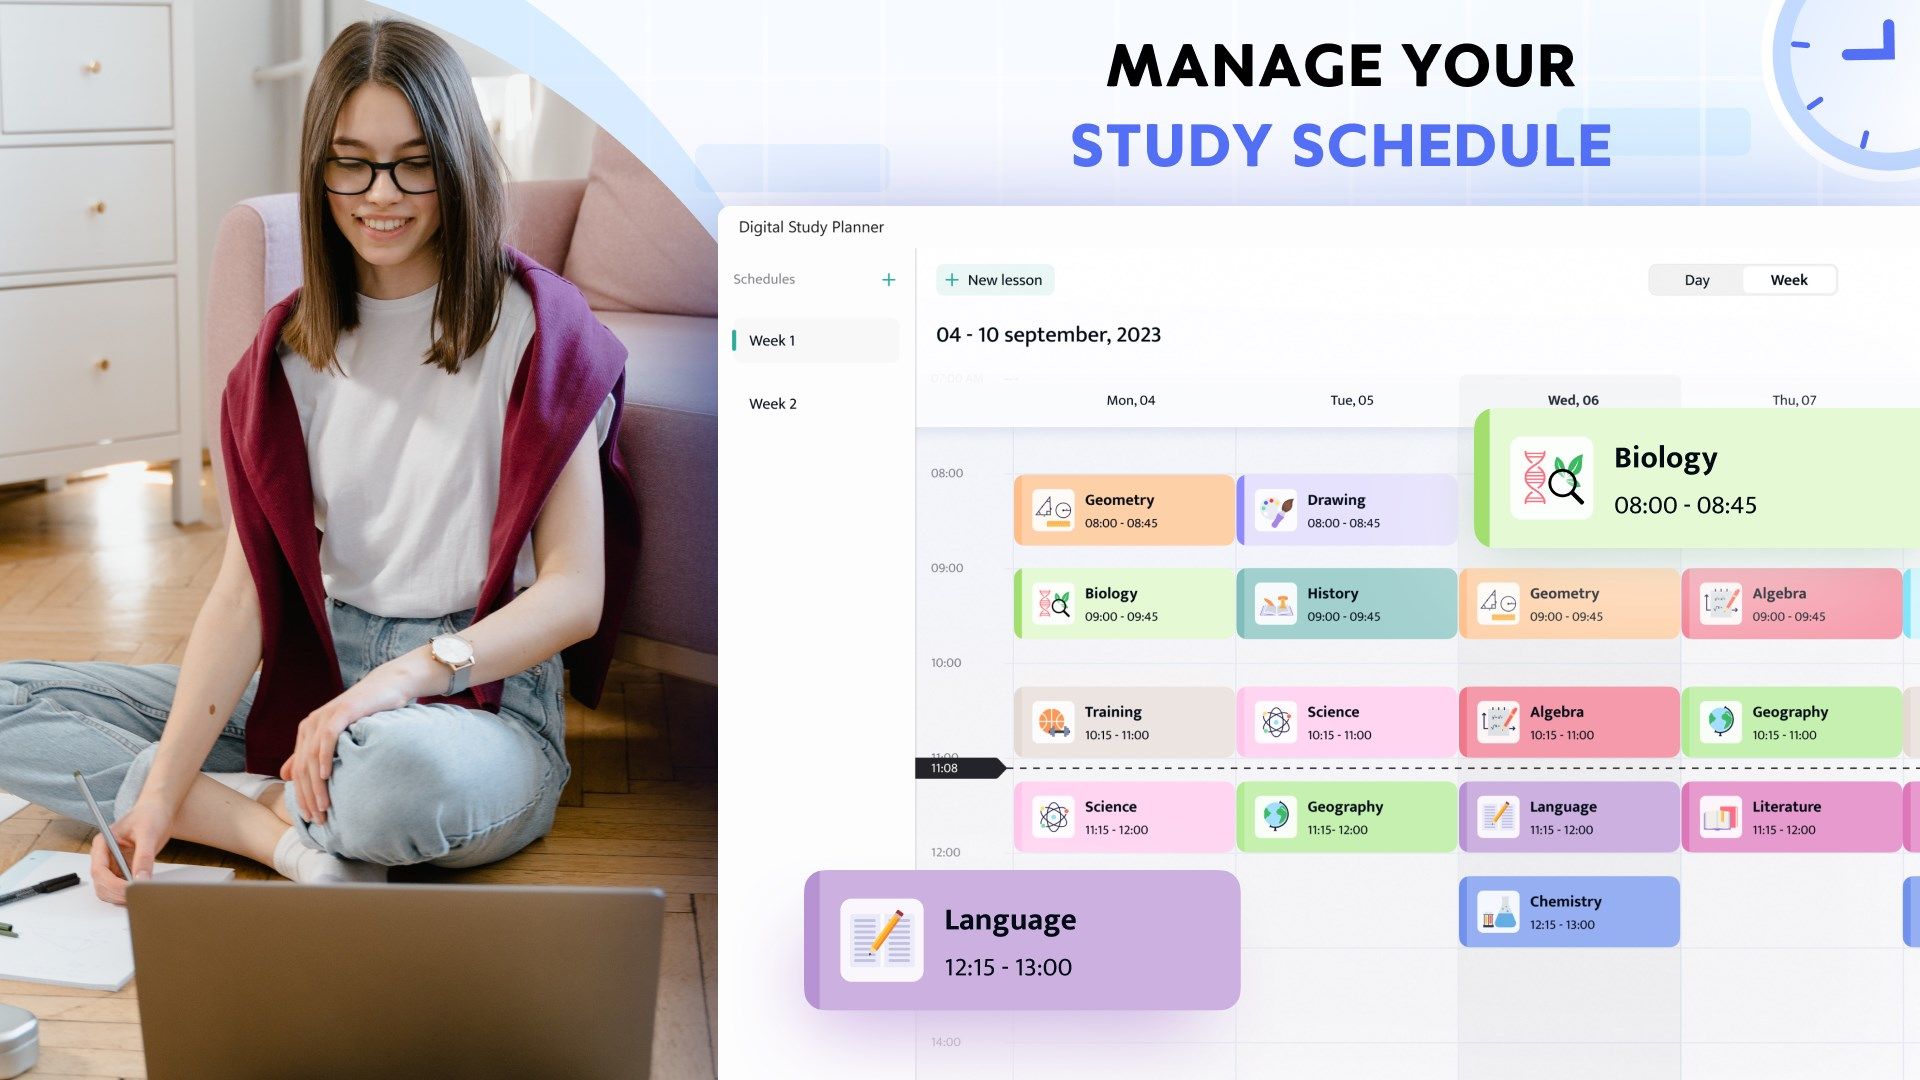 Digital Study Planner: School Timetable